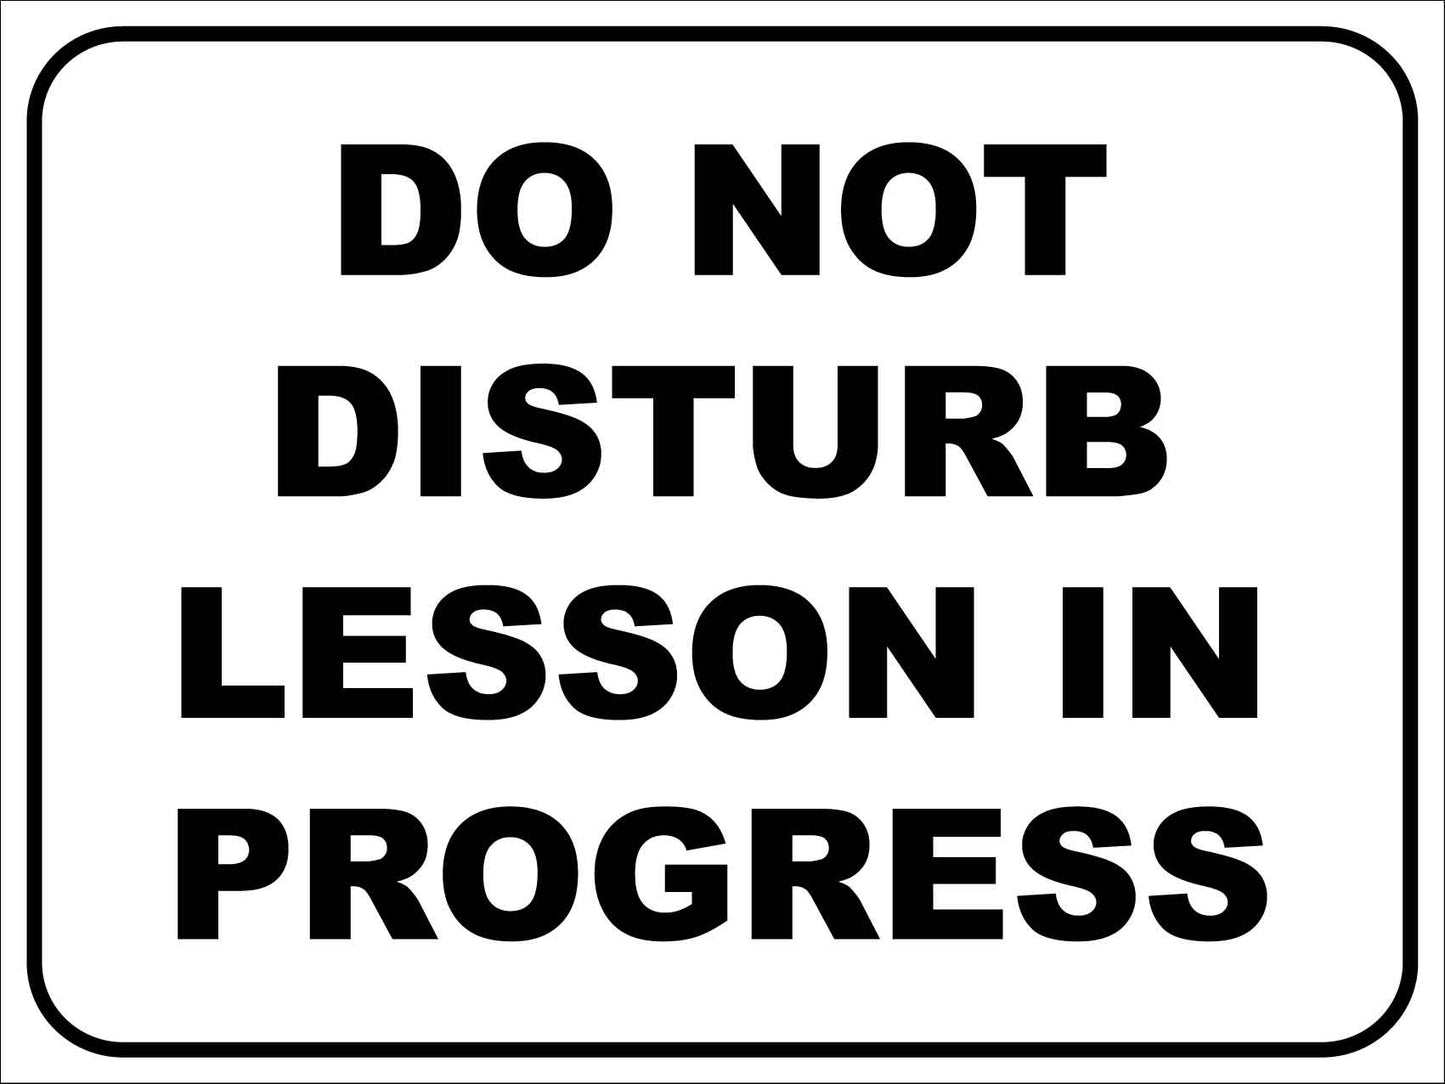 Do Not Disturb Lesson in Progress Sign